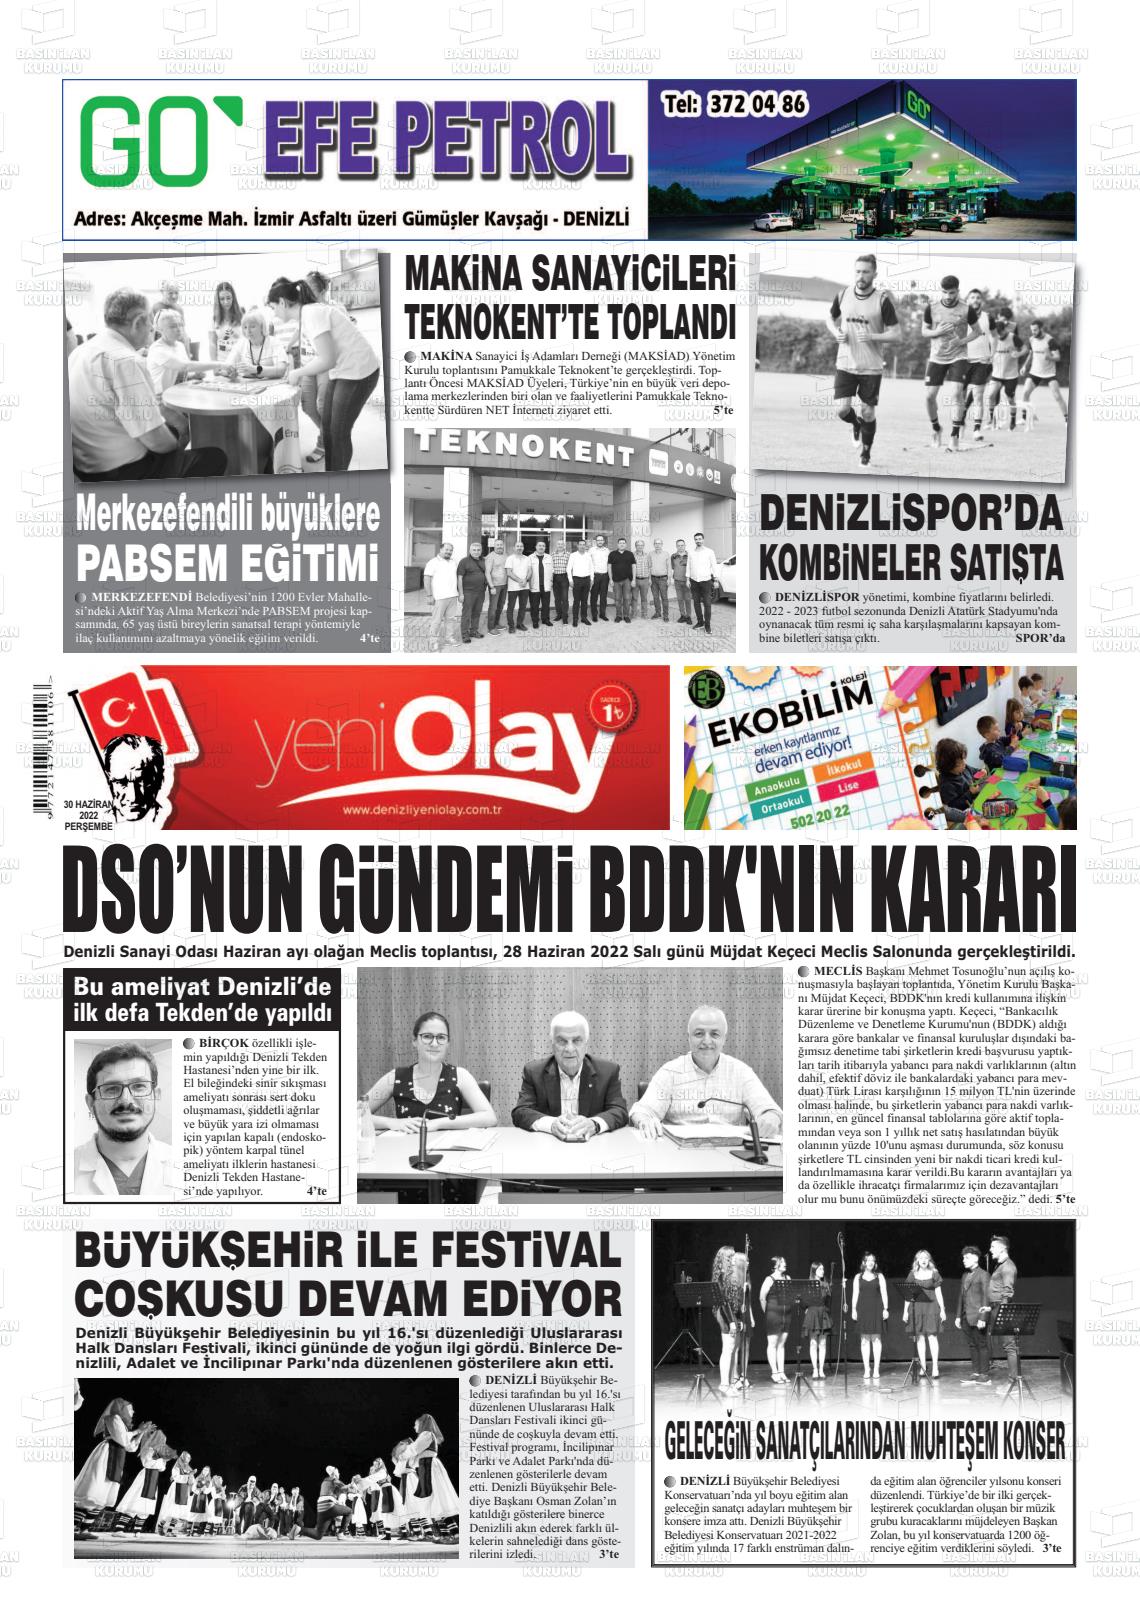 02 Temmuz 2022 Denizli Yeni Olay Gazete Manşeti